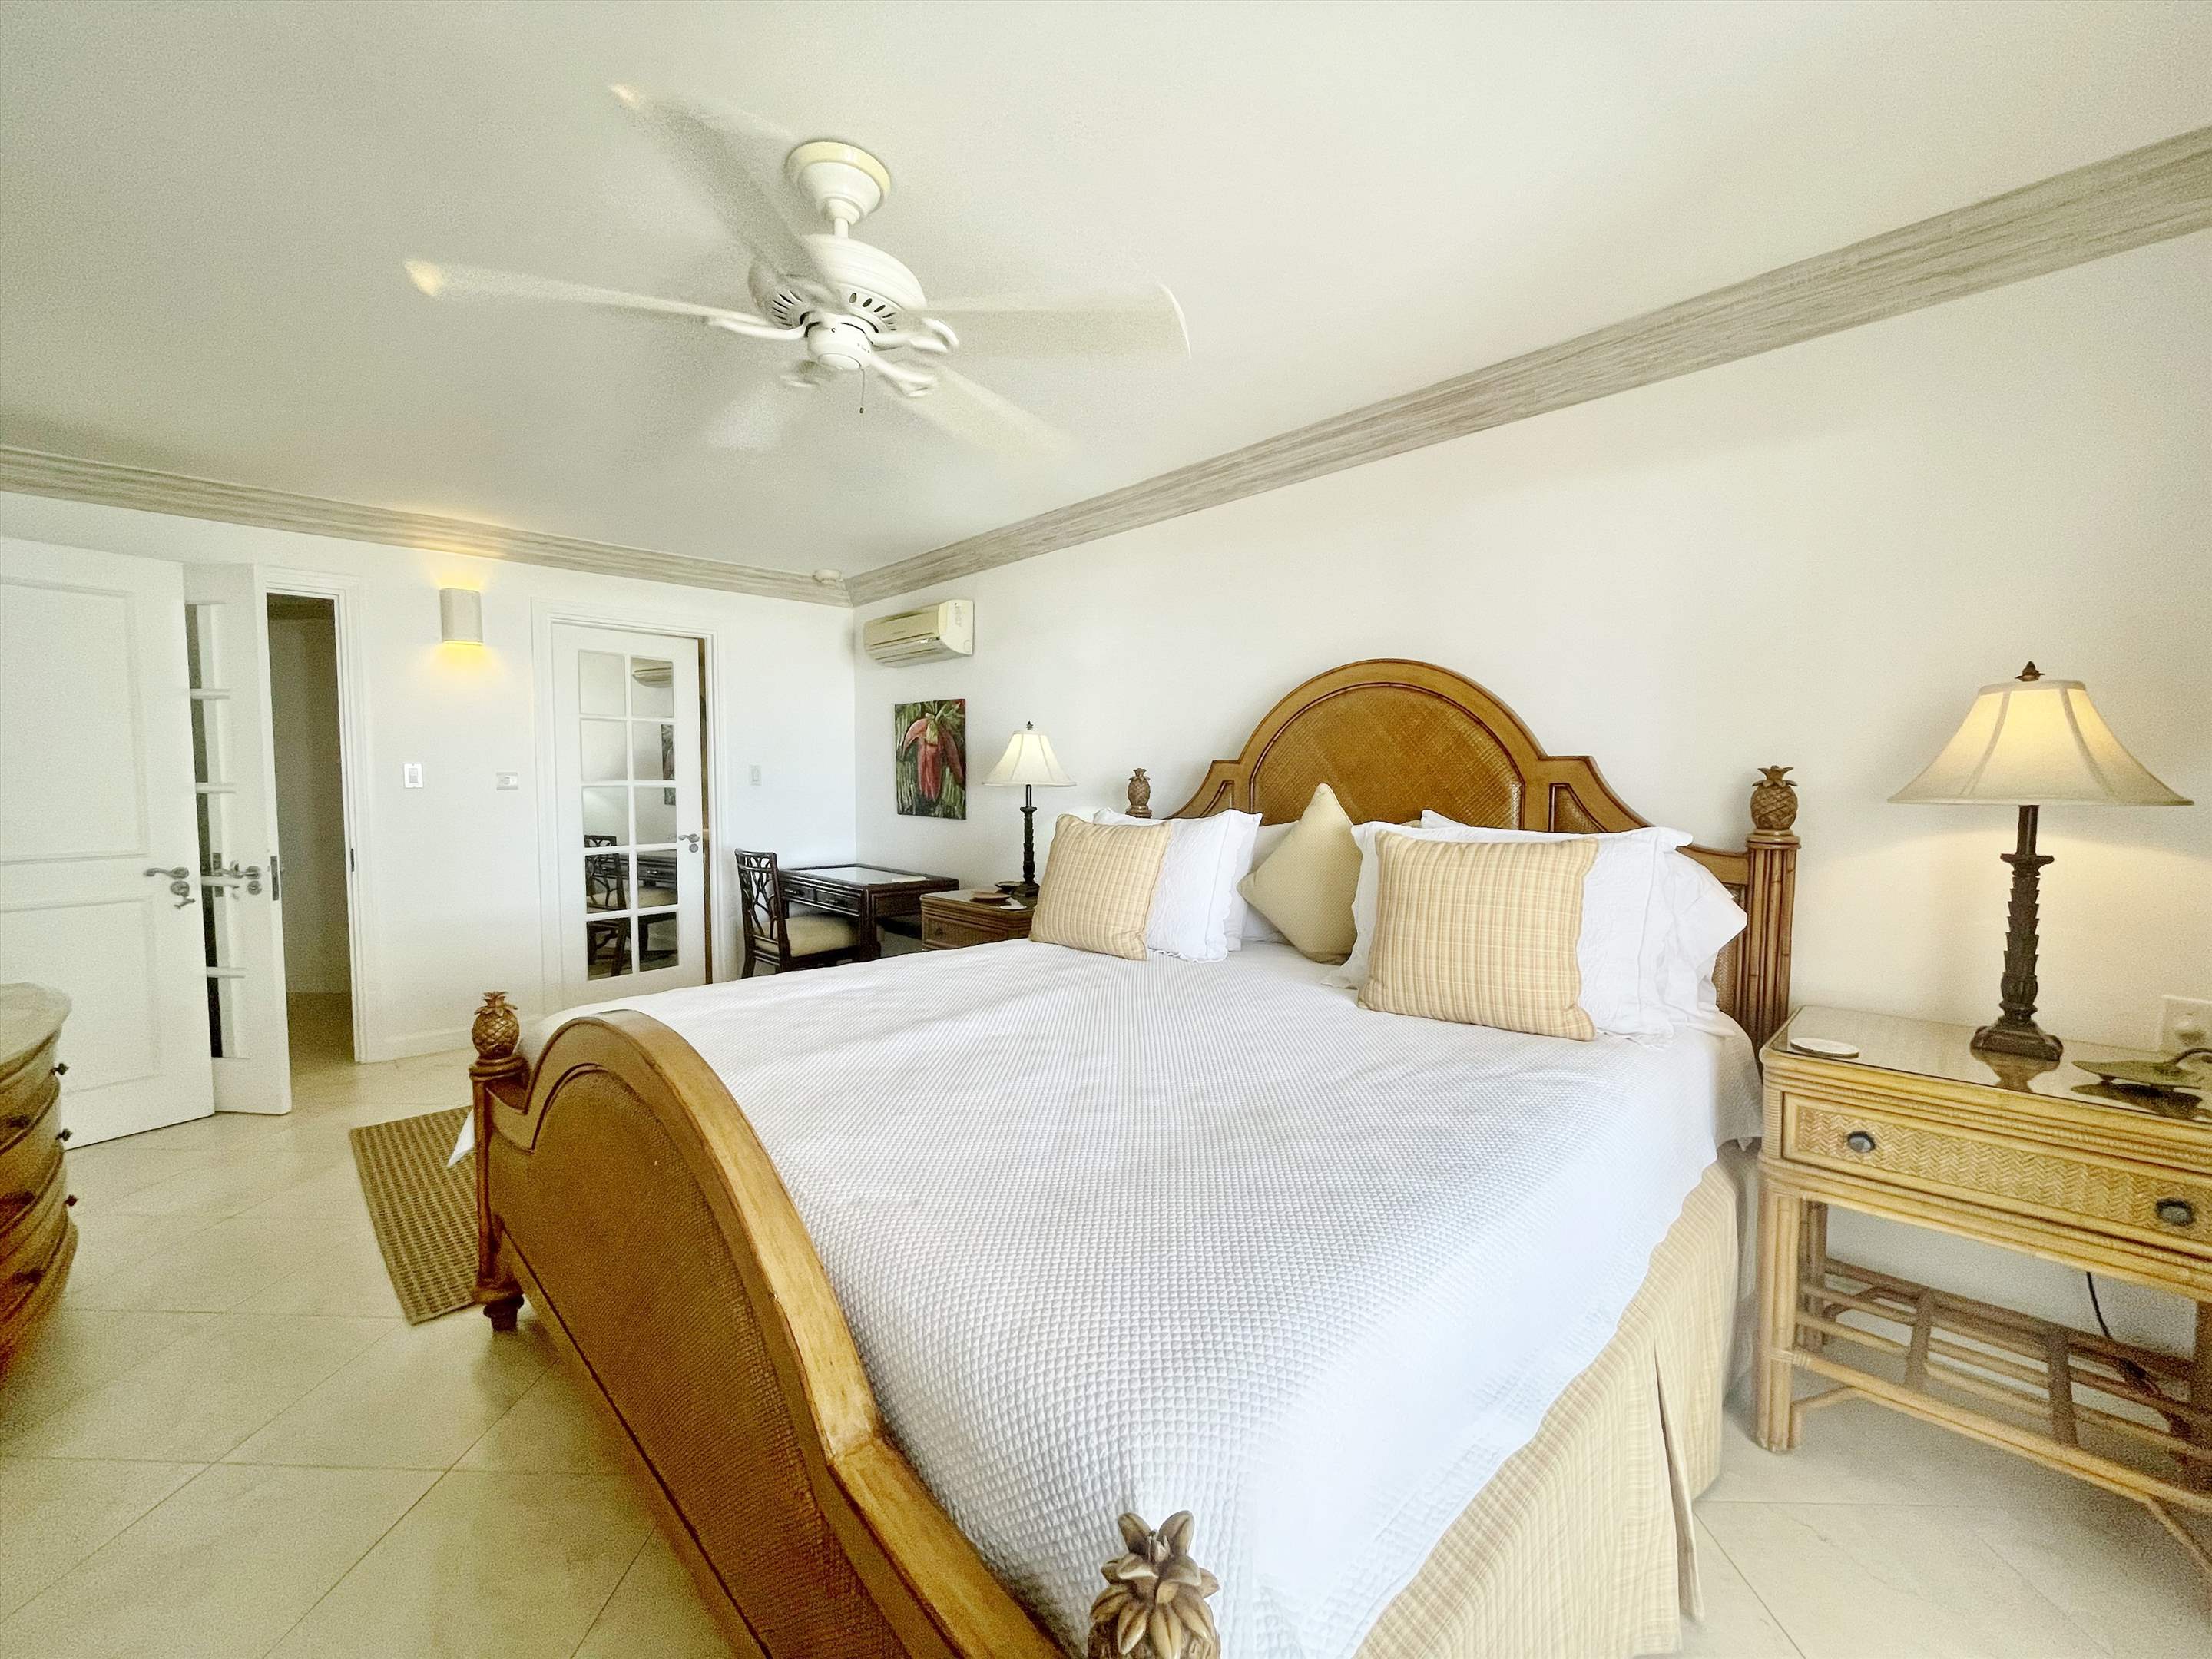 Villas on the Beach 101, 2 bedroom, 2 bedroom apartment in St. James & West Coast, Barbados Photo #11